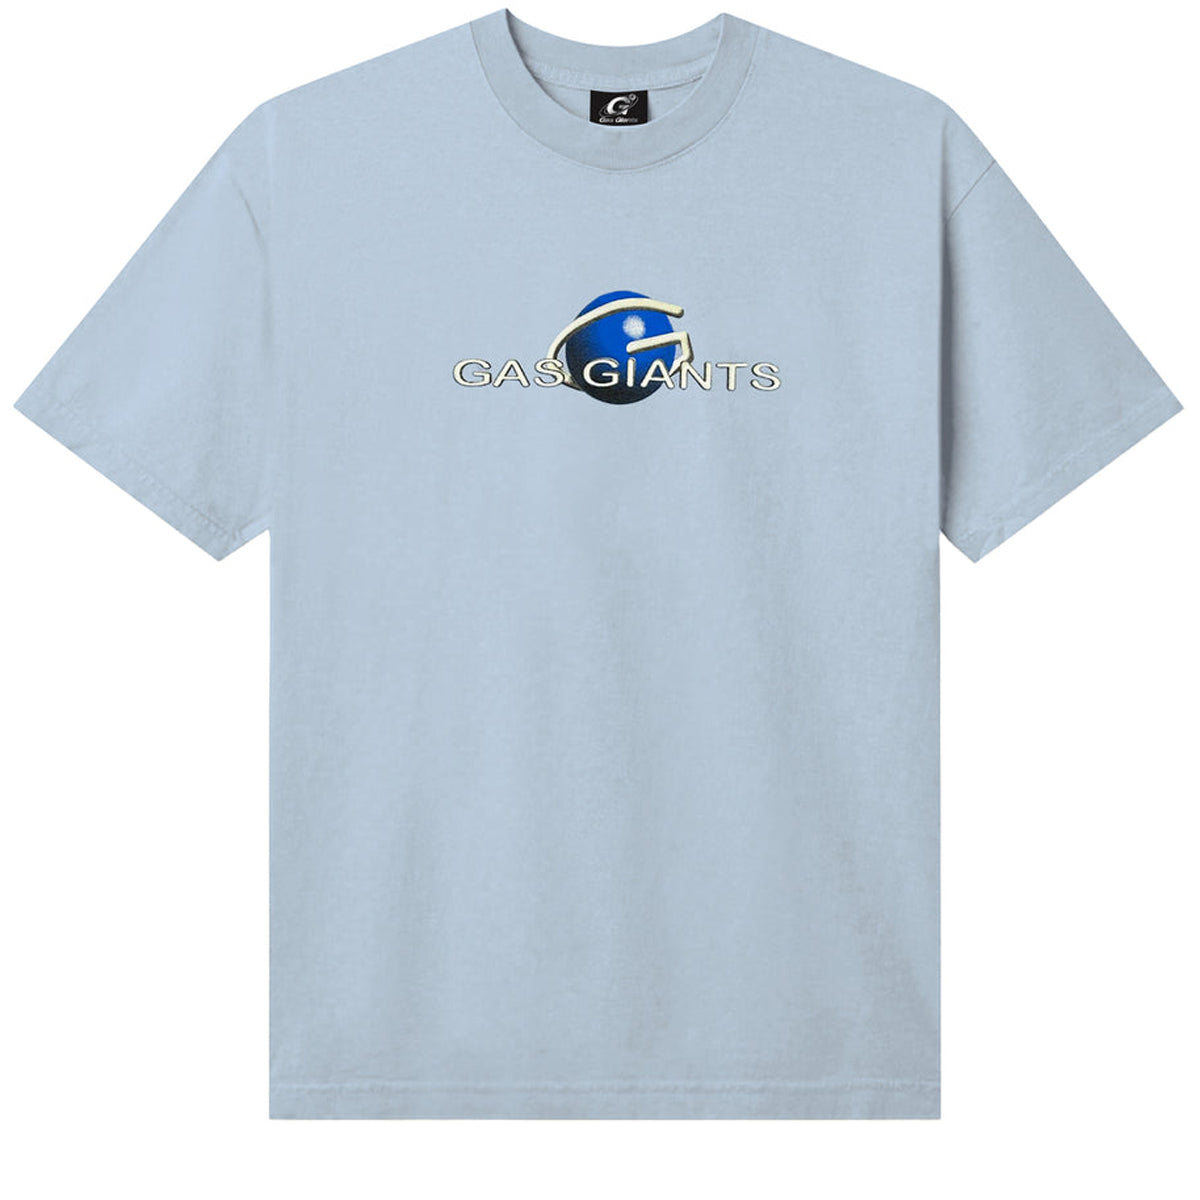 Gas Giants Console T-Shirt - Powder Blue image 1